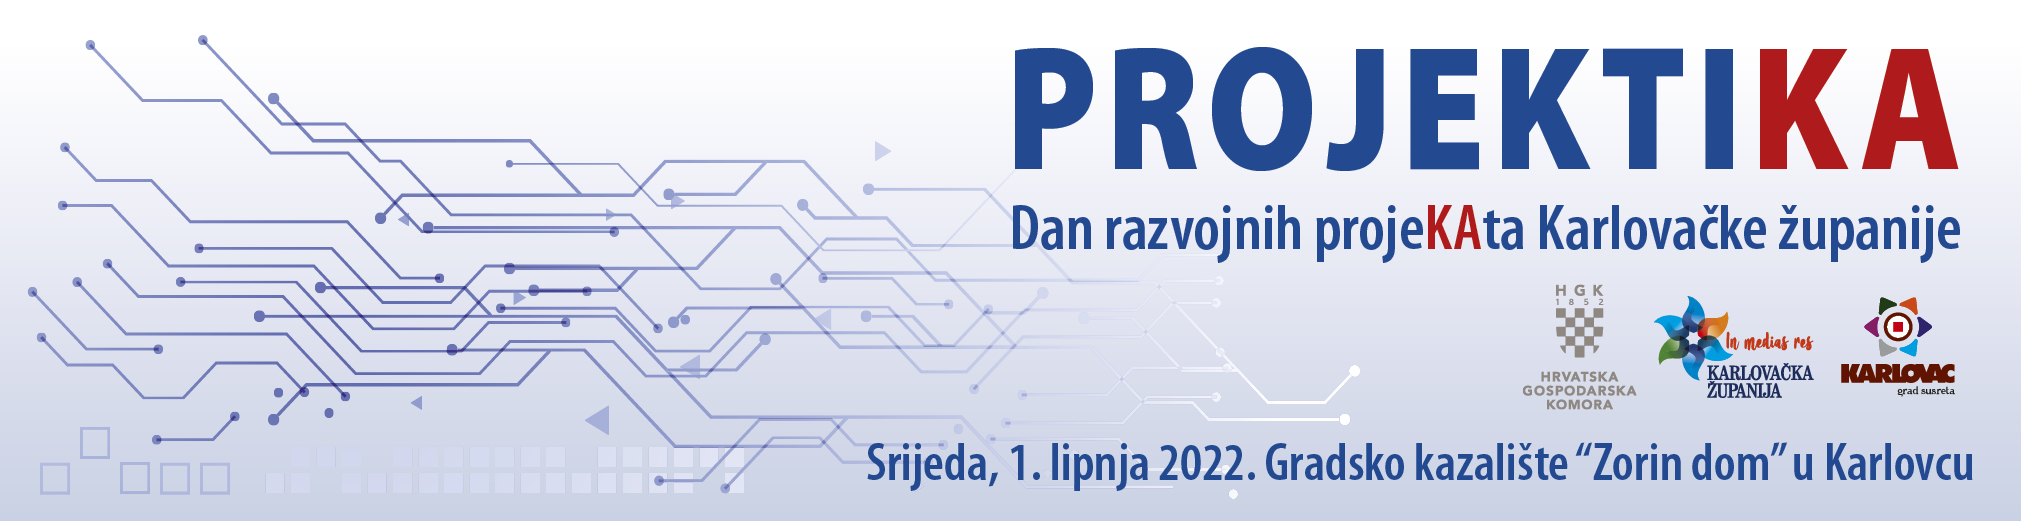 Projektika web banner